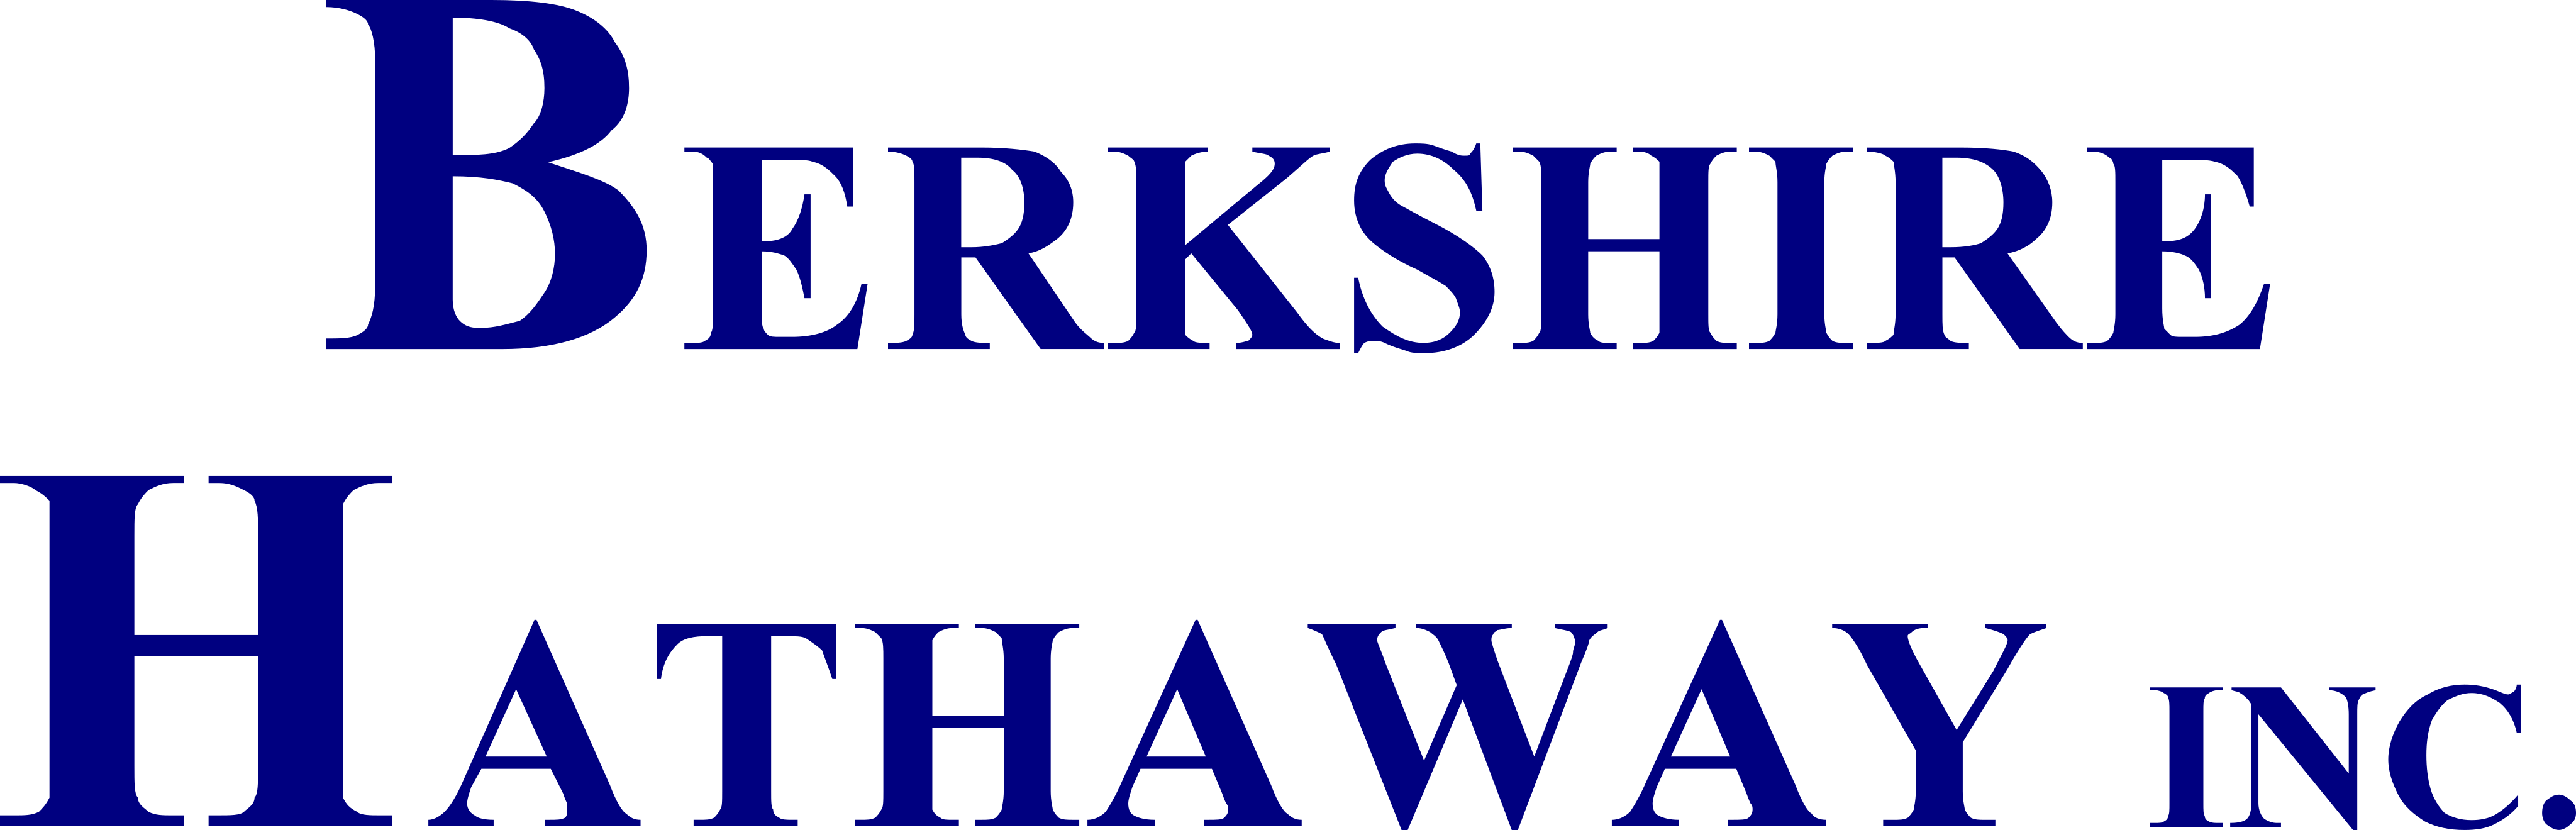 berkshire hathaway inc logo 1 - Berkshire Hathaway Logo